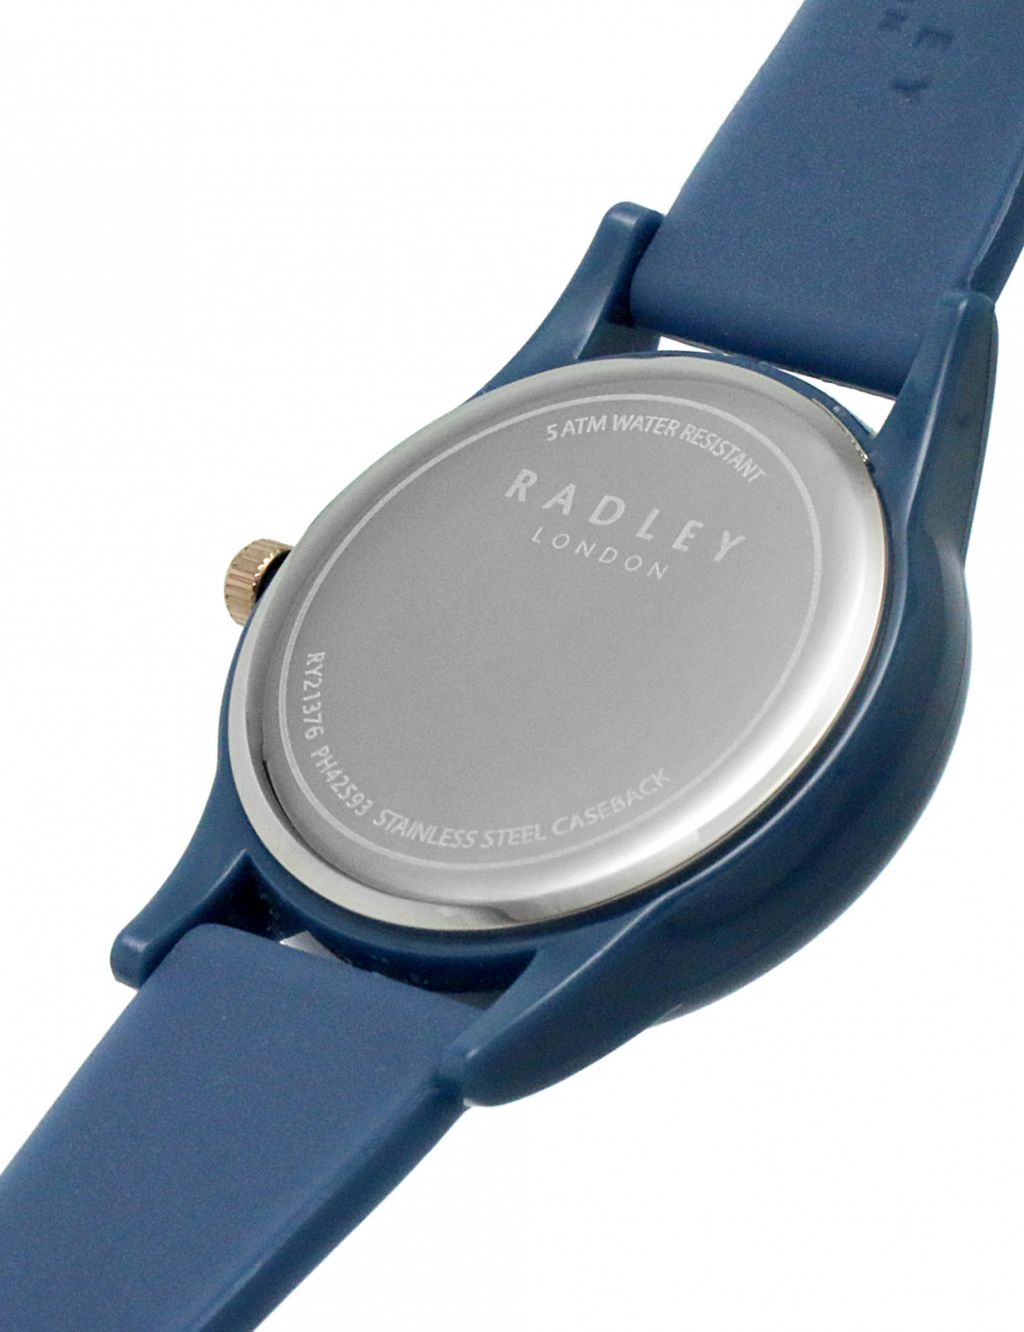 Radley Scottie Dog Blue Leather Watch image 7